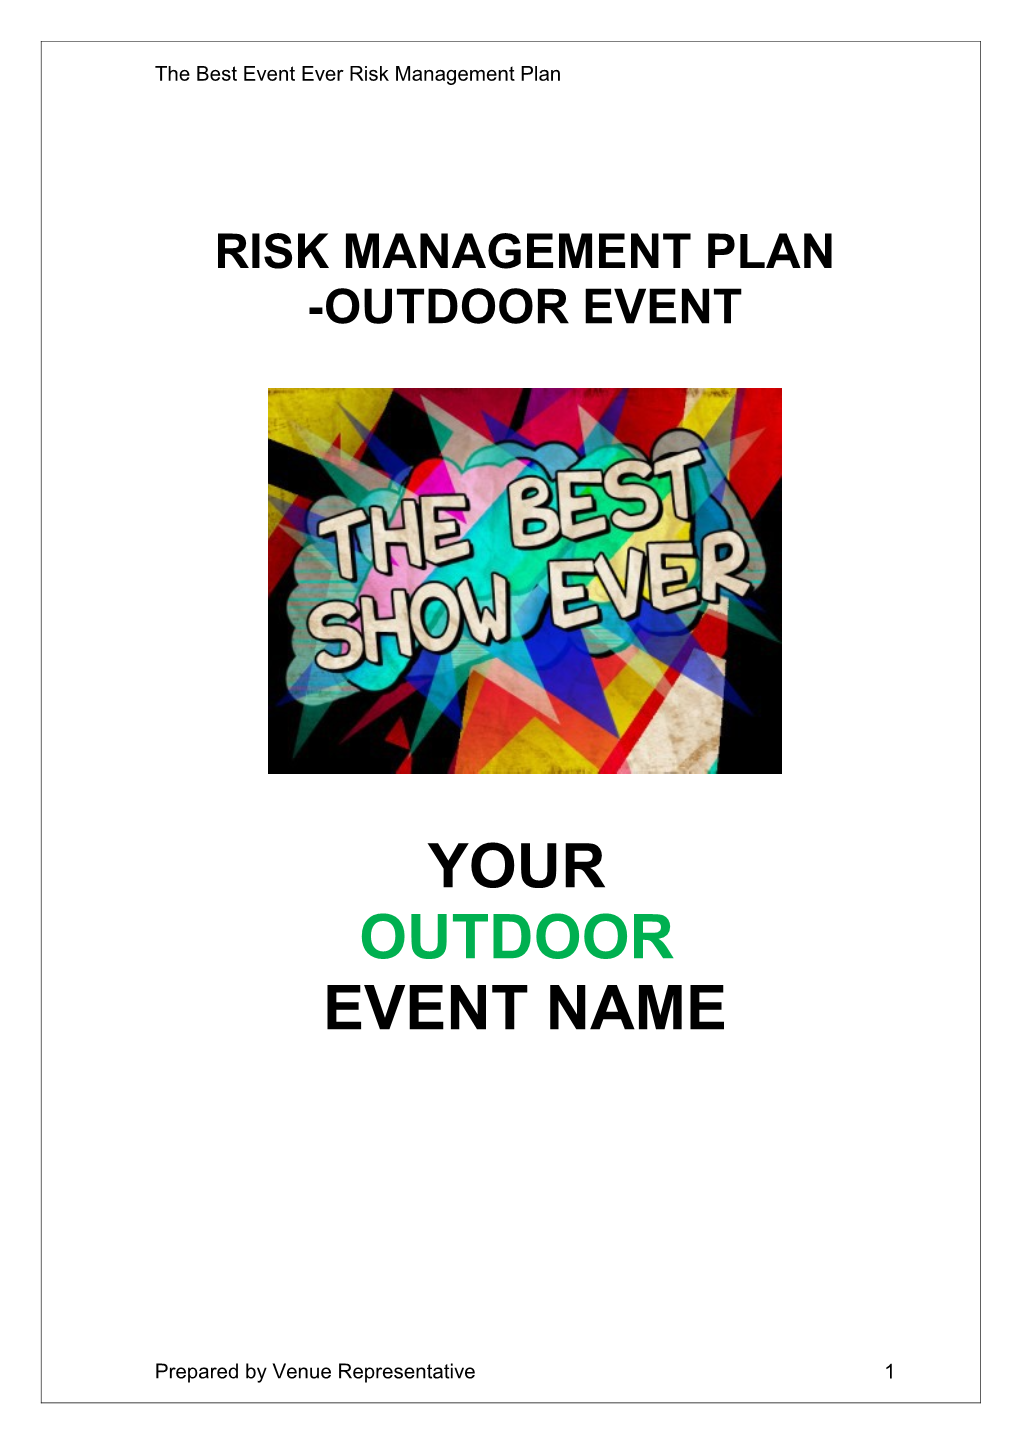 The Best Event Ever Risk Management Plan